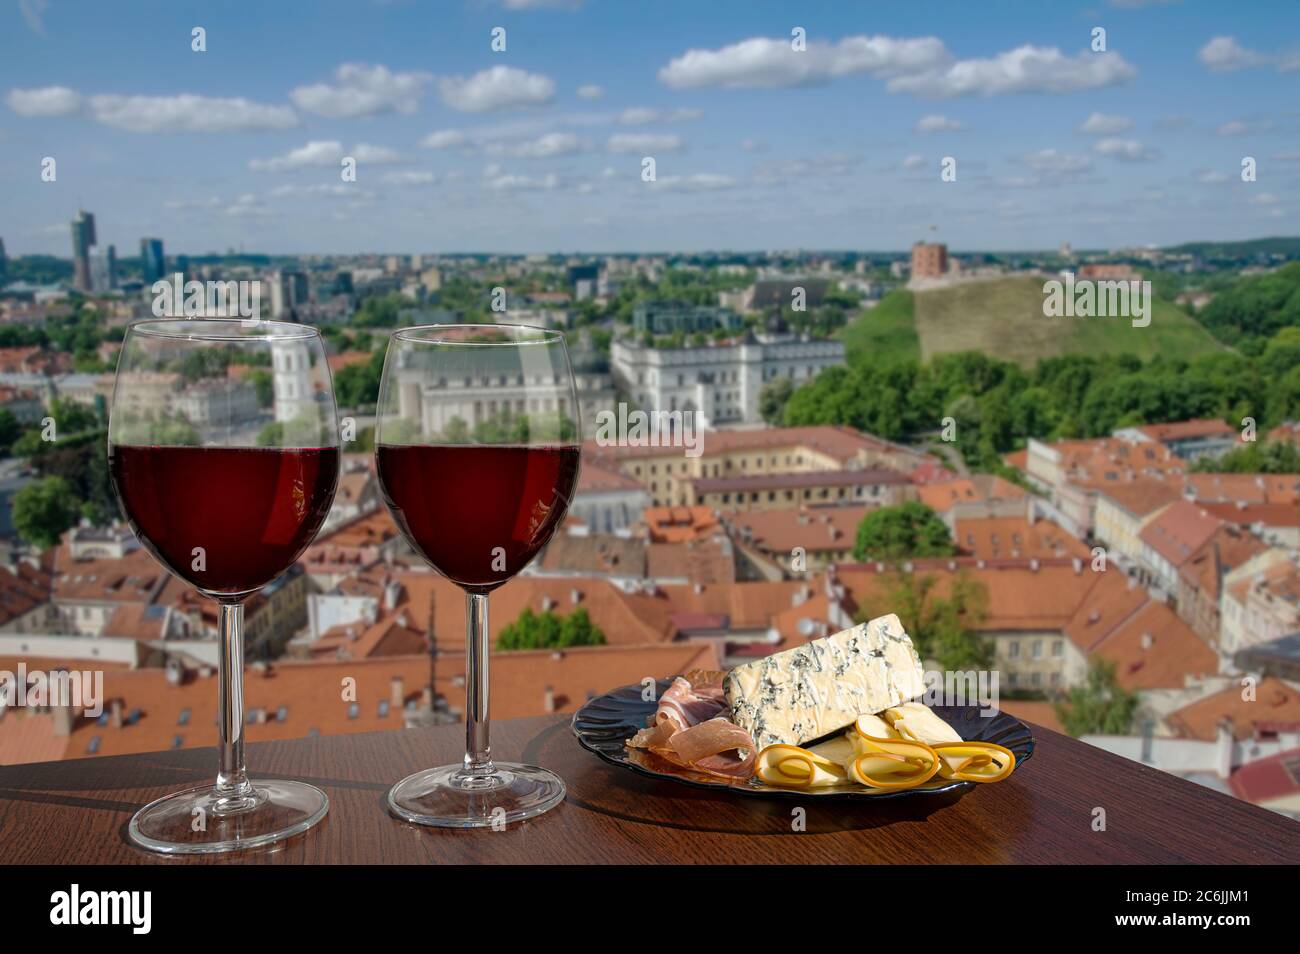 Dos copas de vino con surtido de charcutería a la vista de Vilnius, Lituania. Copa de vino tinto con diferentes aperitivos - plato con jamón, cortado en rodajas, azul Foto de stock